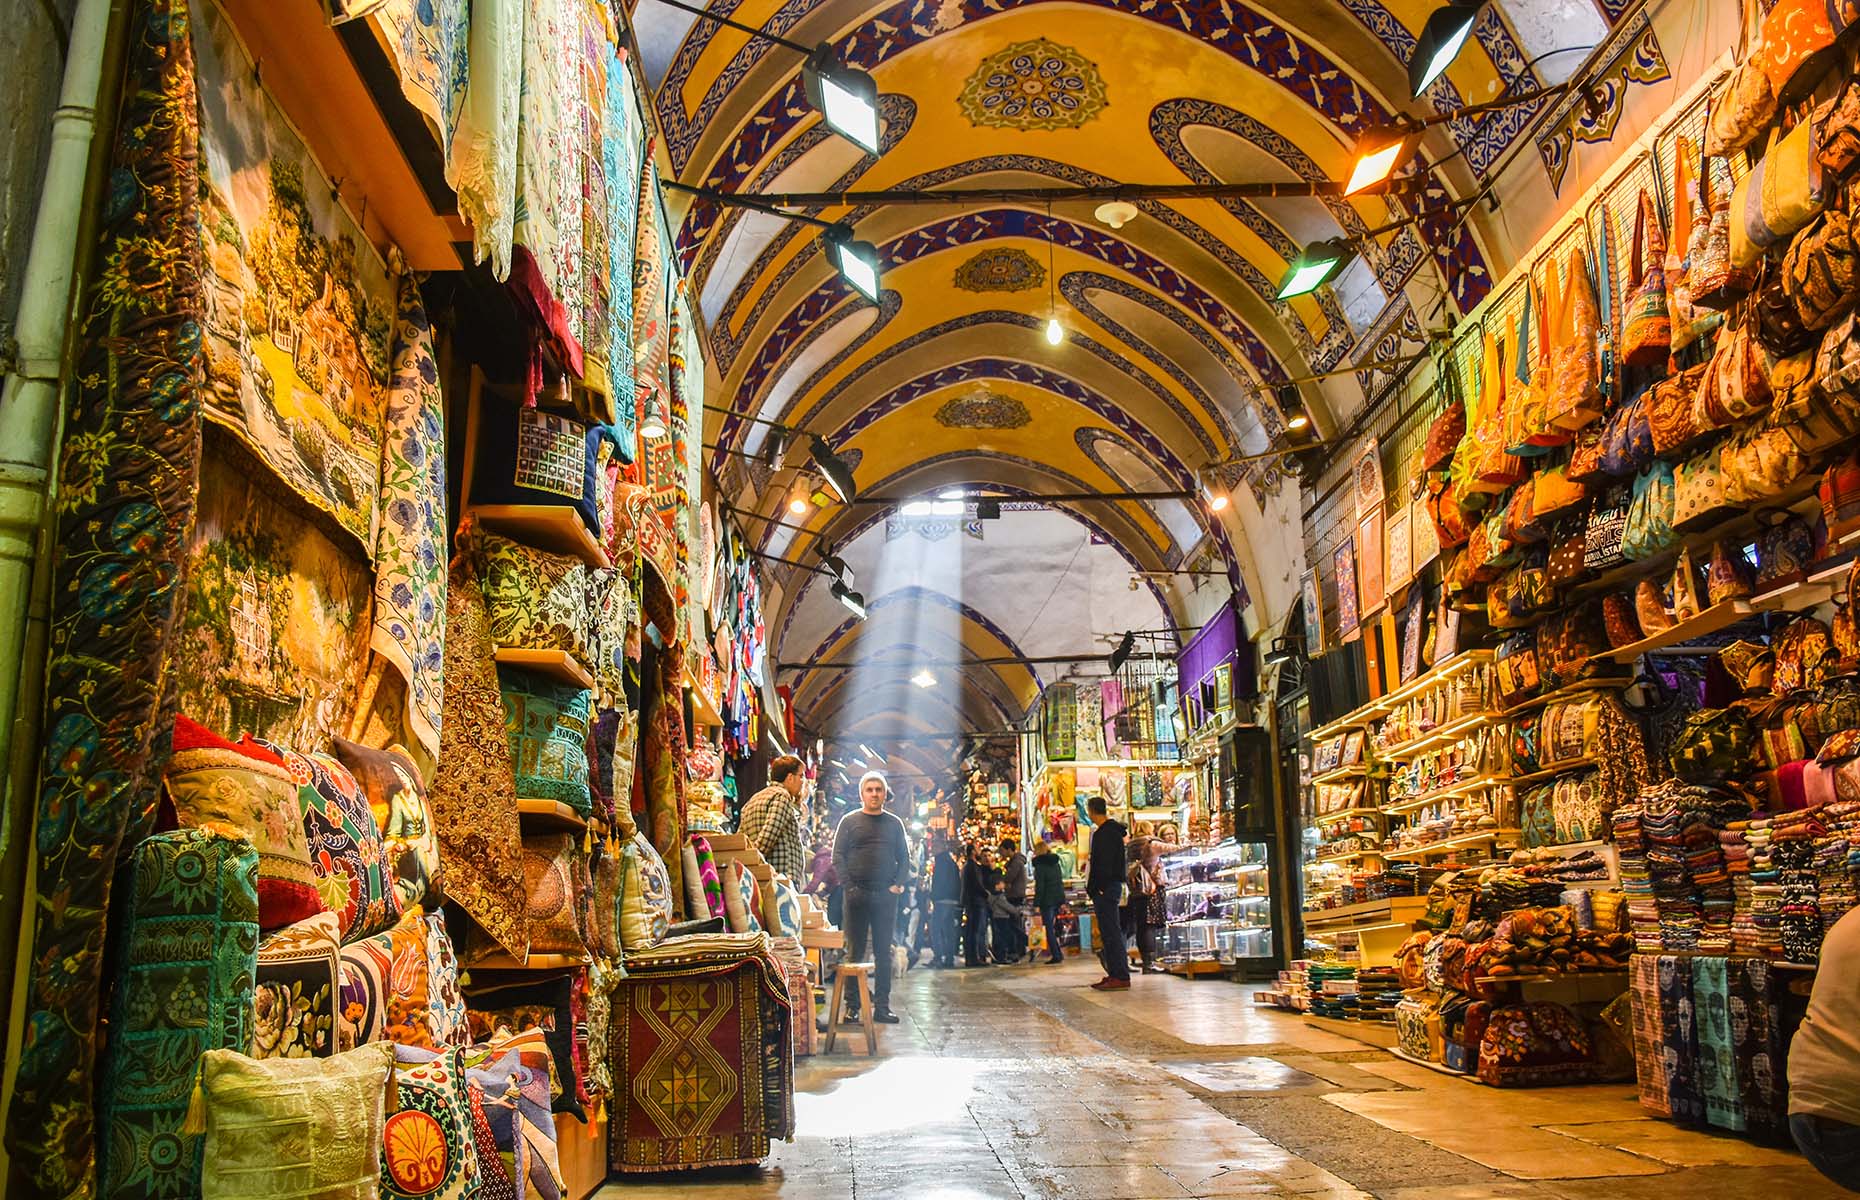 Grand Bazaar in Istanbul (Image: Tekkol/Shutterstock)